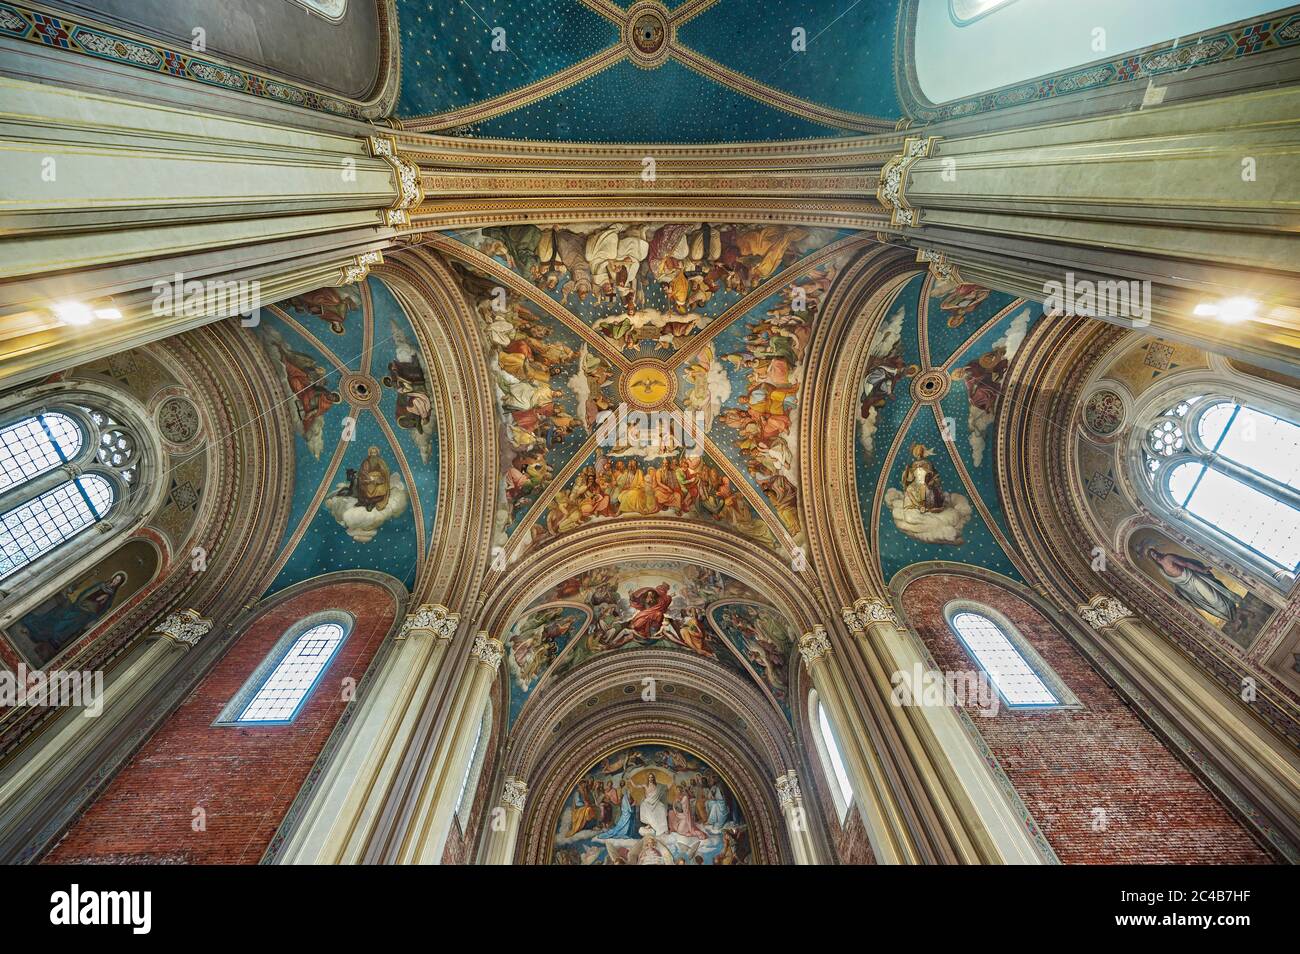 Ceiling frescos, Parish and University Church of St. Ludwig, Ludwigskirche, Schwabing, Munich, Upper Bavaria, Bavaria, Germany Stock Photo